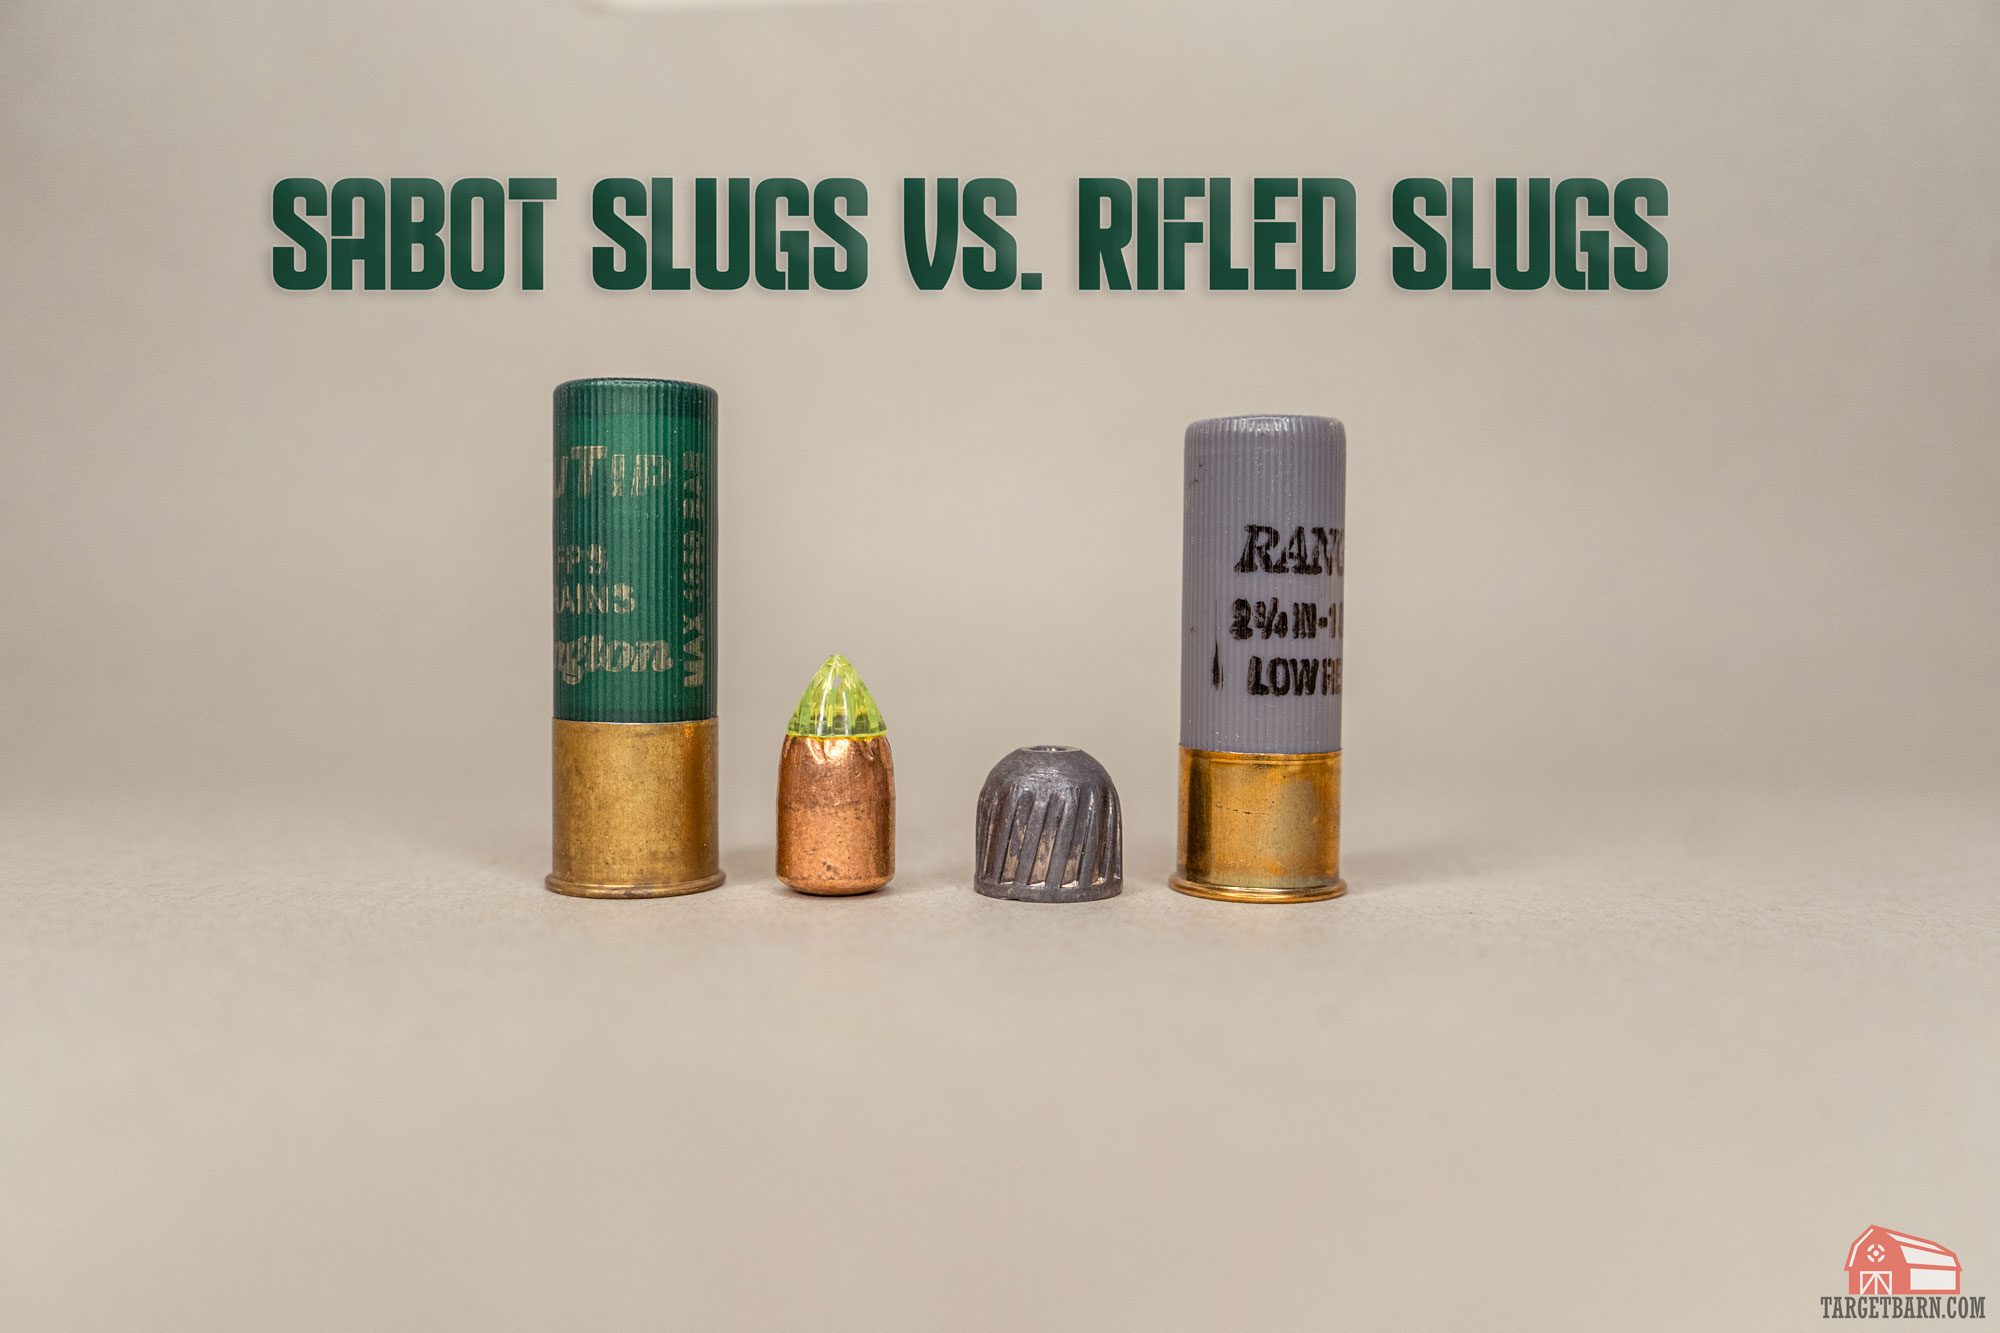 12 gauge shotgun slug damage